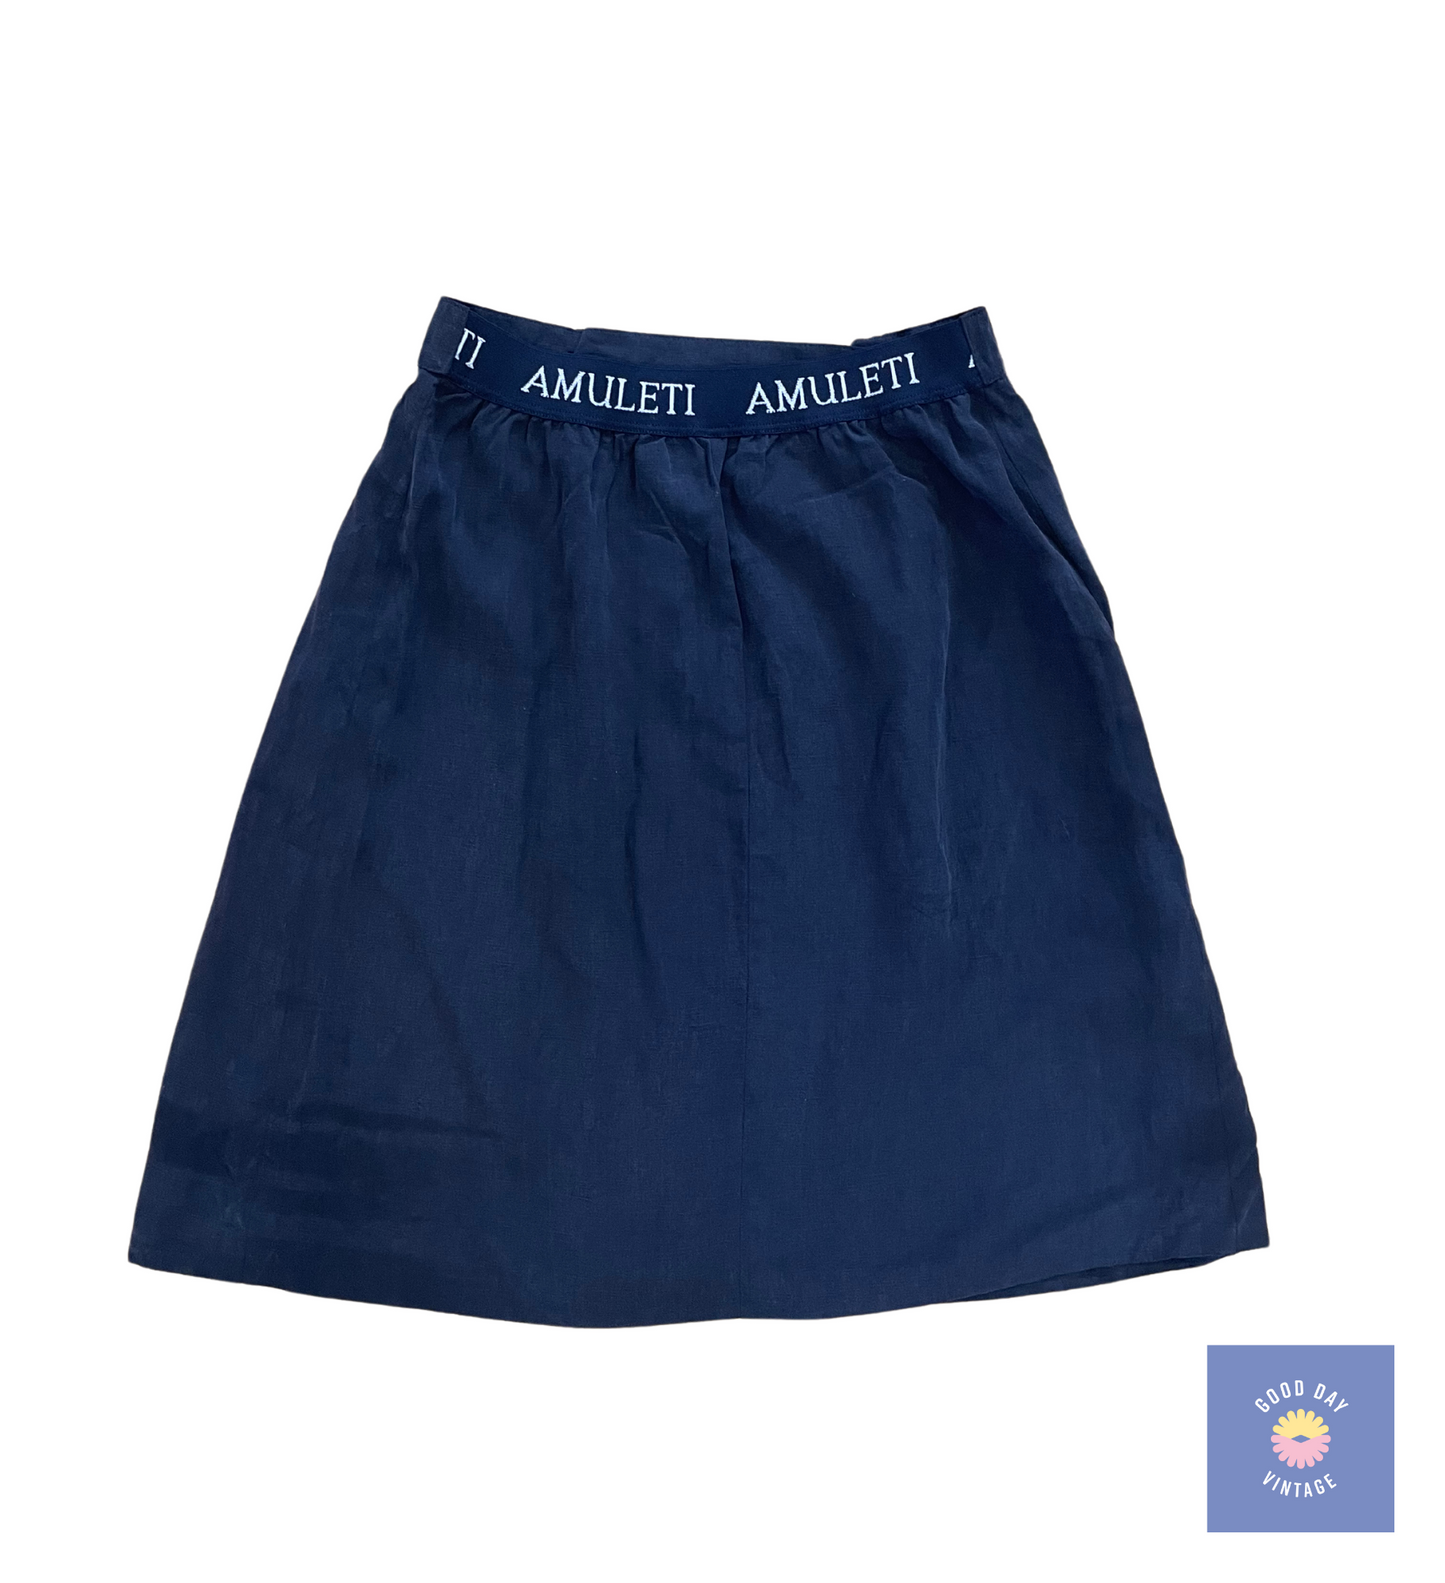 Late 80's Mariella Burani for Amuleti Wrap Skirt